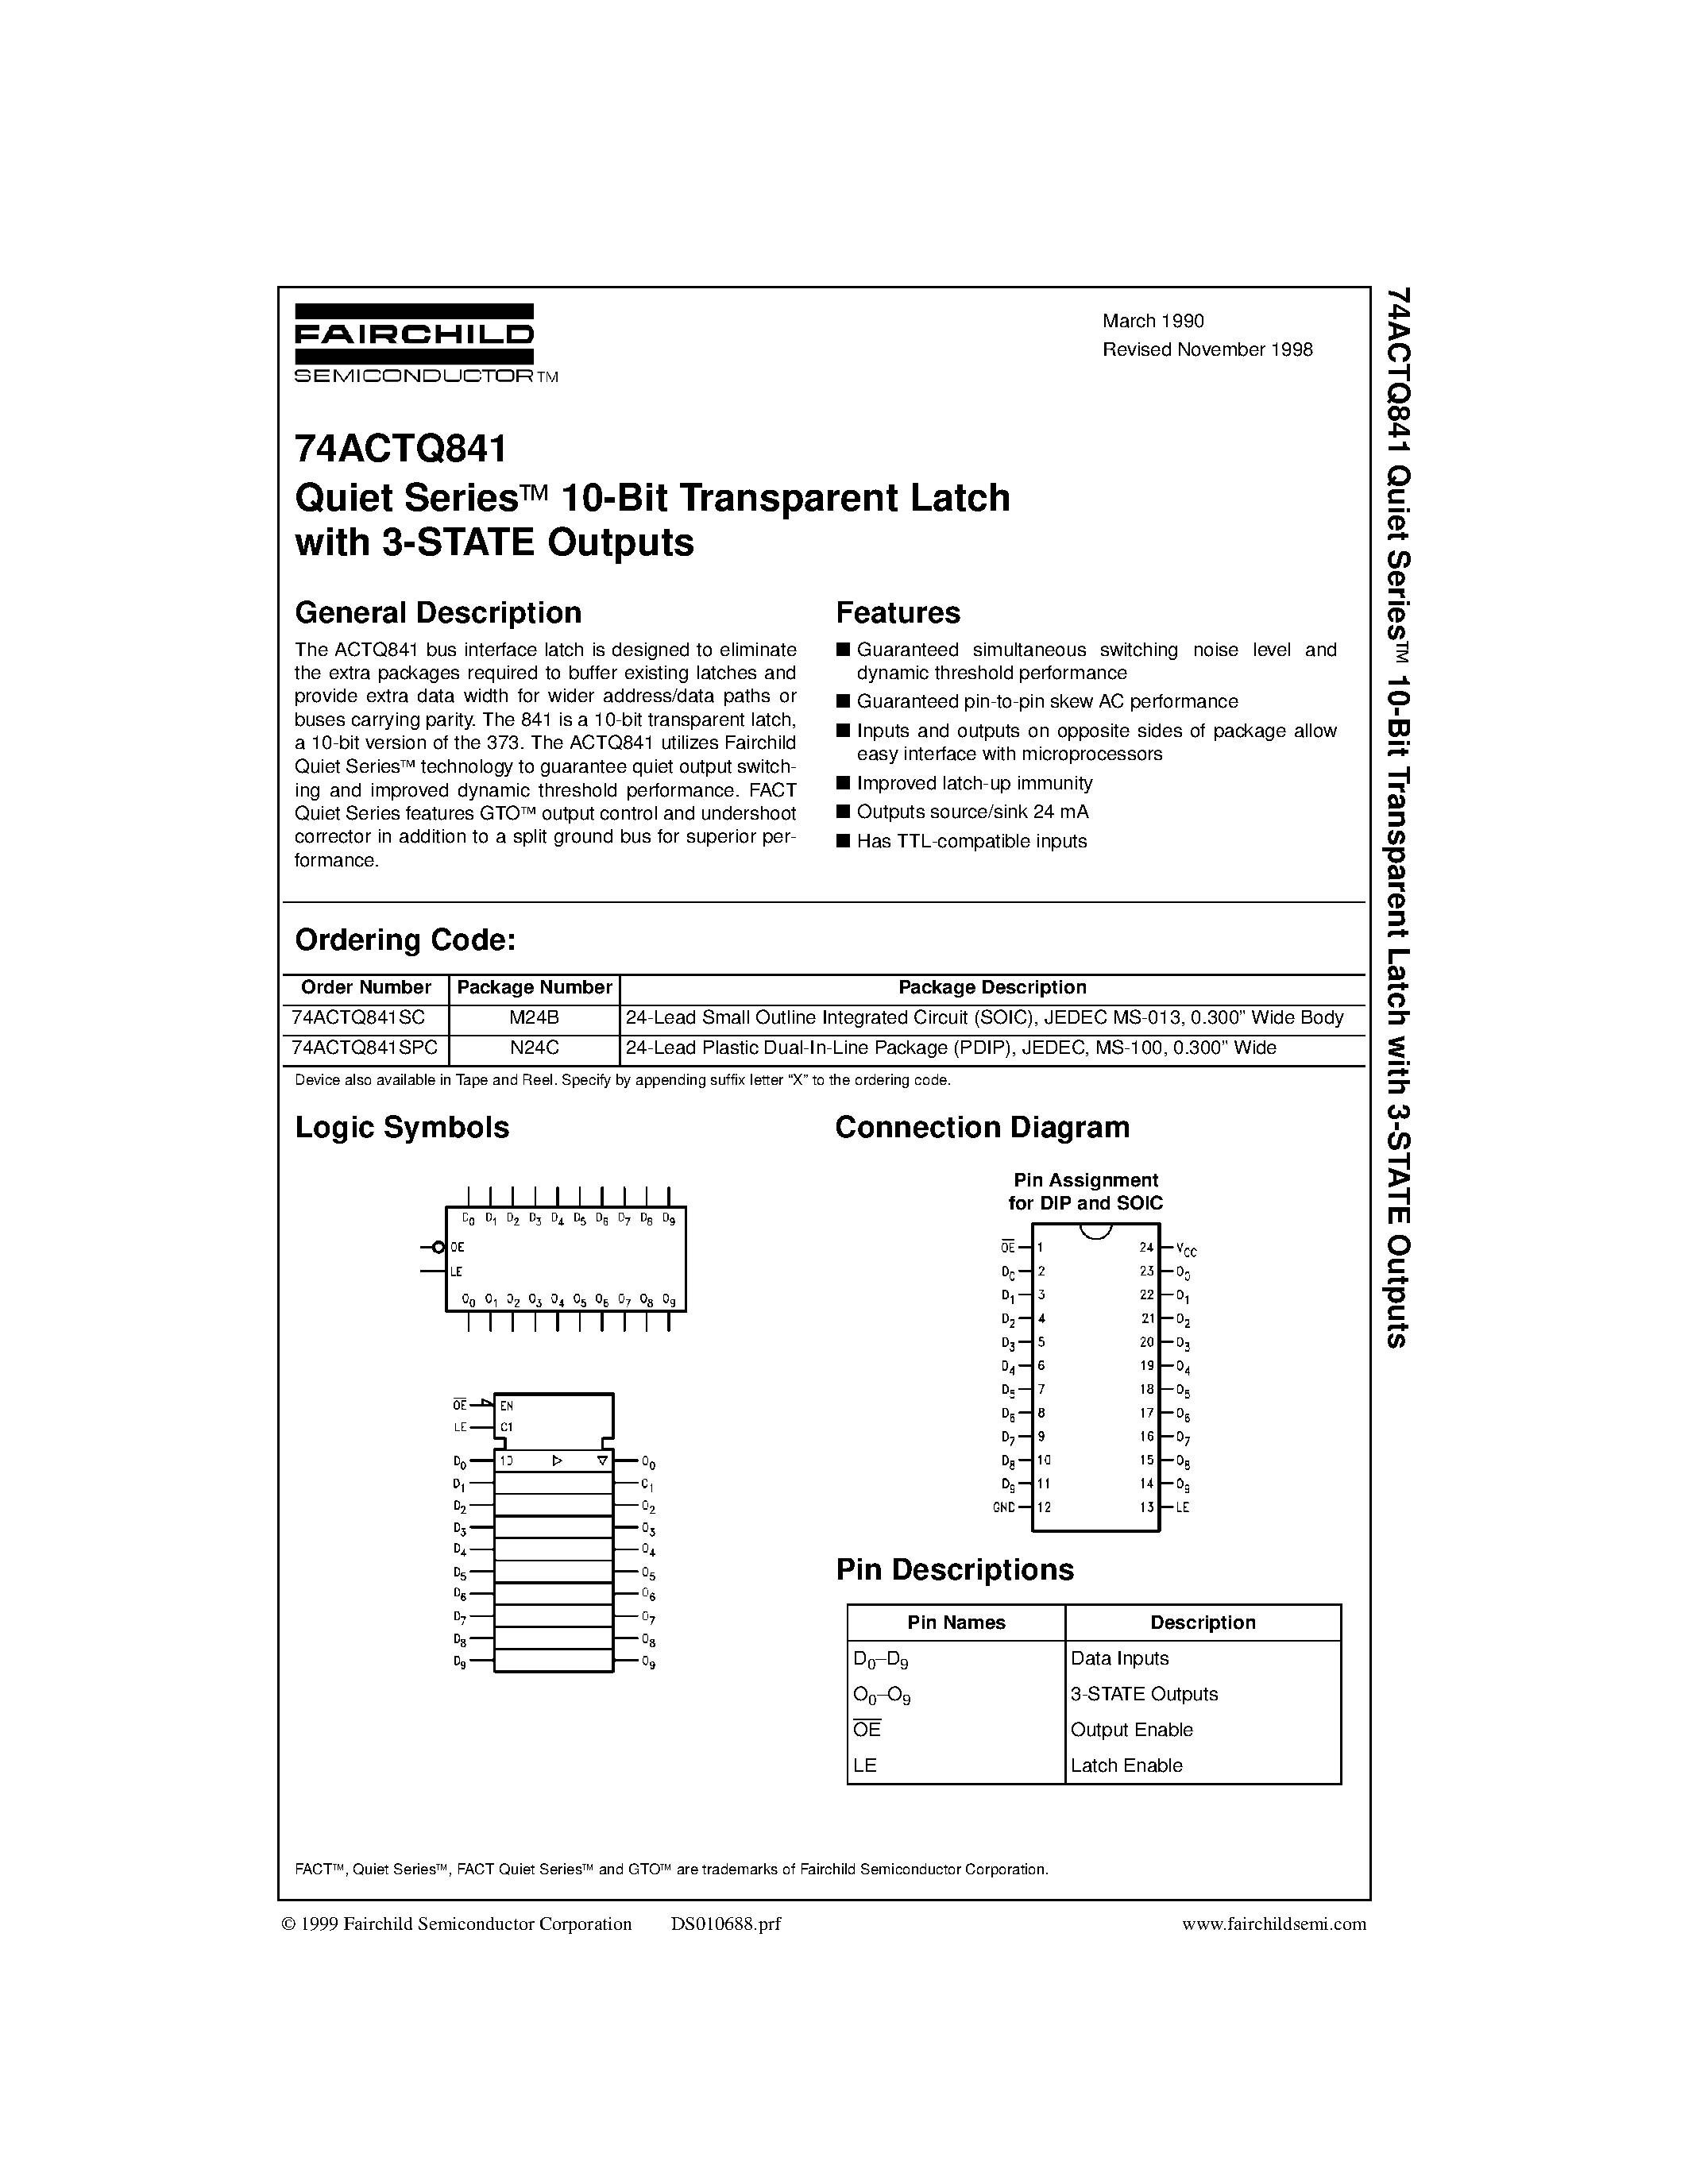 Даташит 74ACTQ841 - Quiet Seriesa 10-Bit Transparent Latch with 3-STATE Outputs страница 1